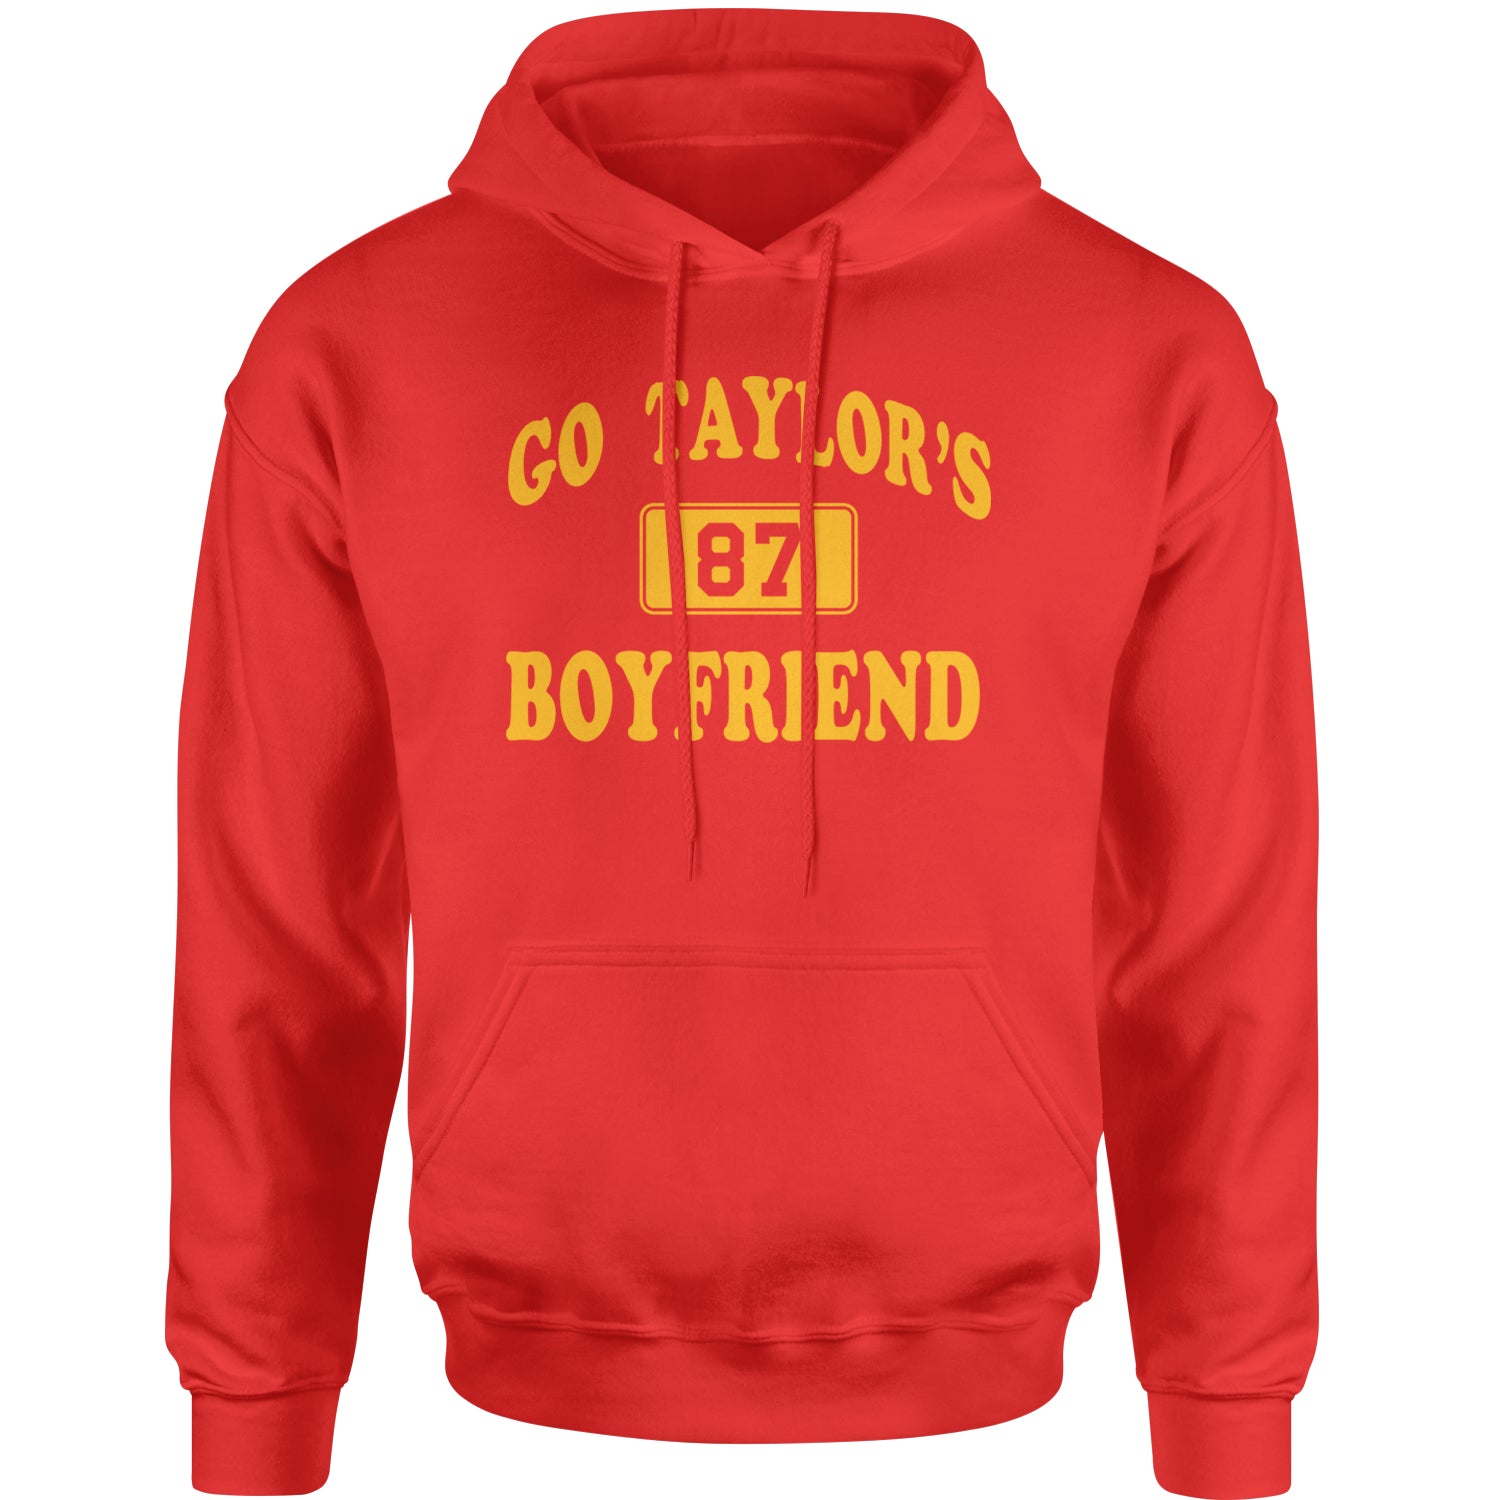 Go Taylor's Boyfriend Kansas City Adult Hoodie Sweatshirt